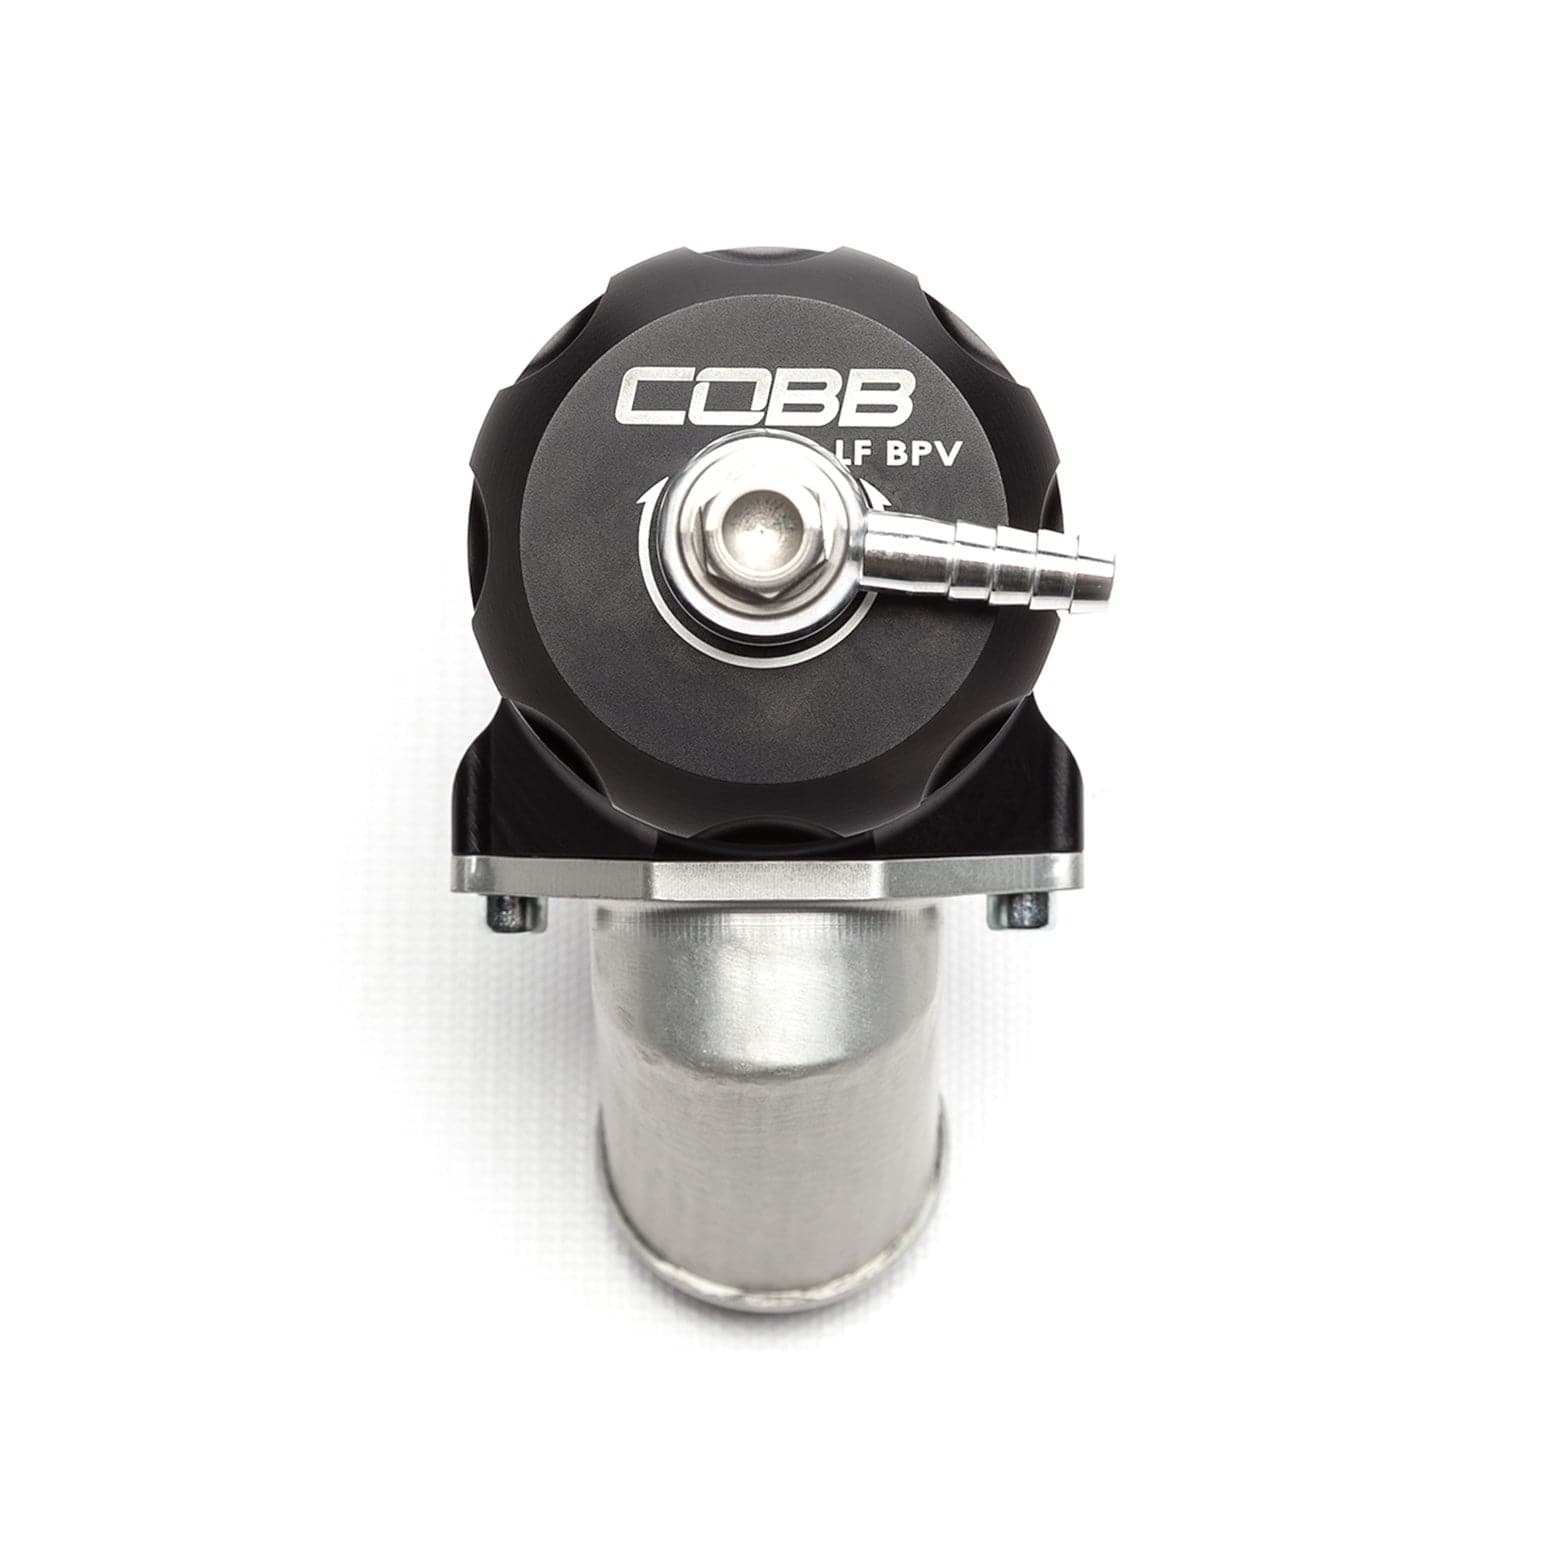 Cobb Universal LF BPV (cobb715665)